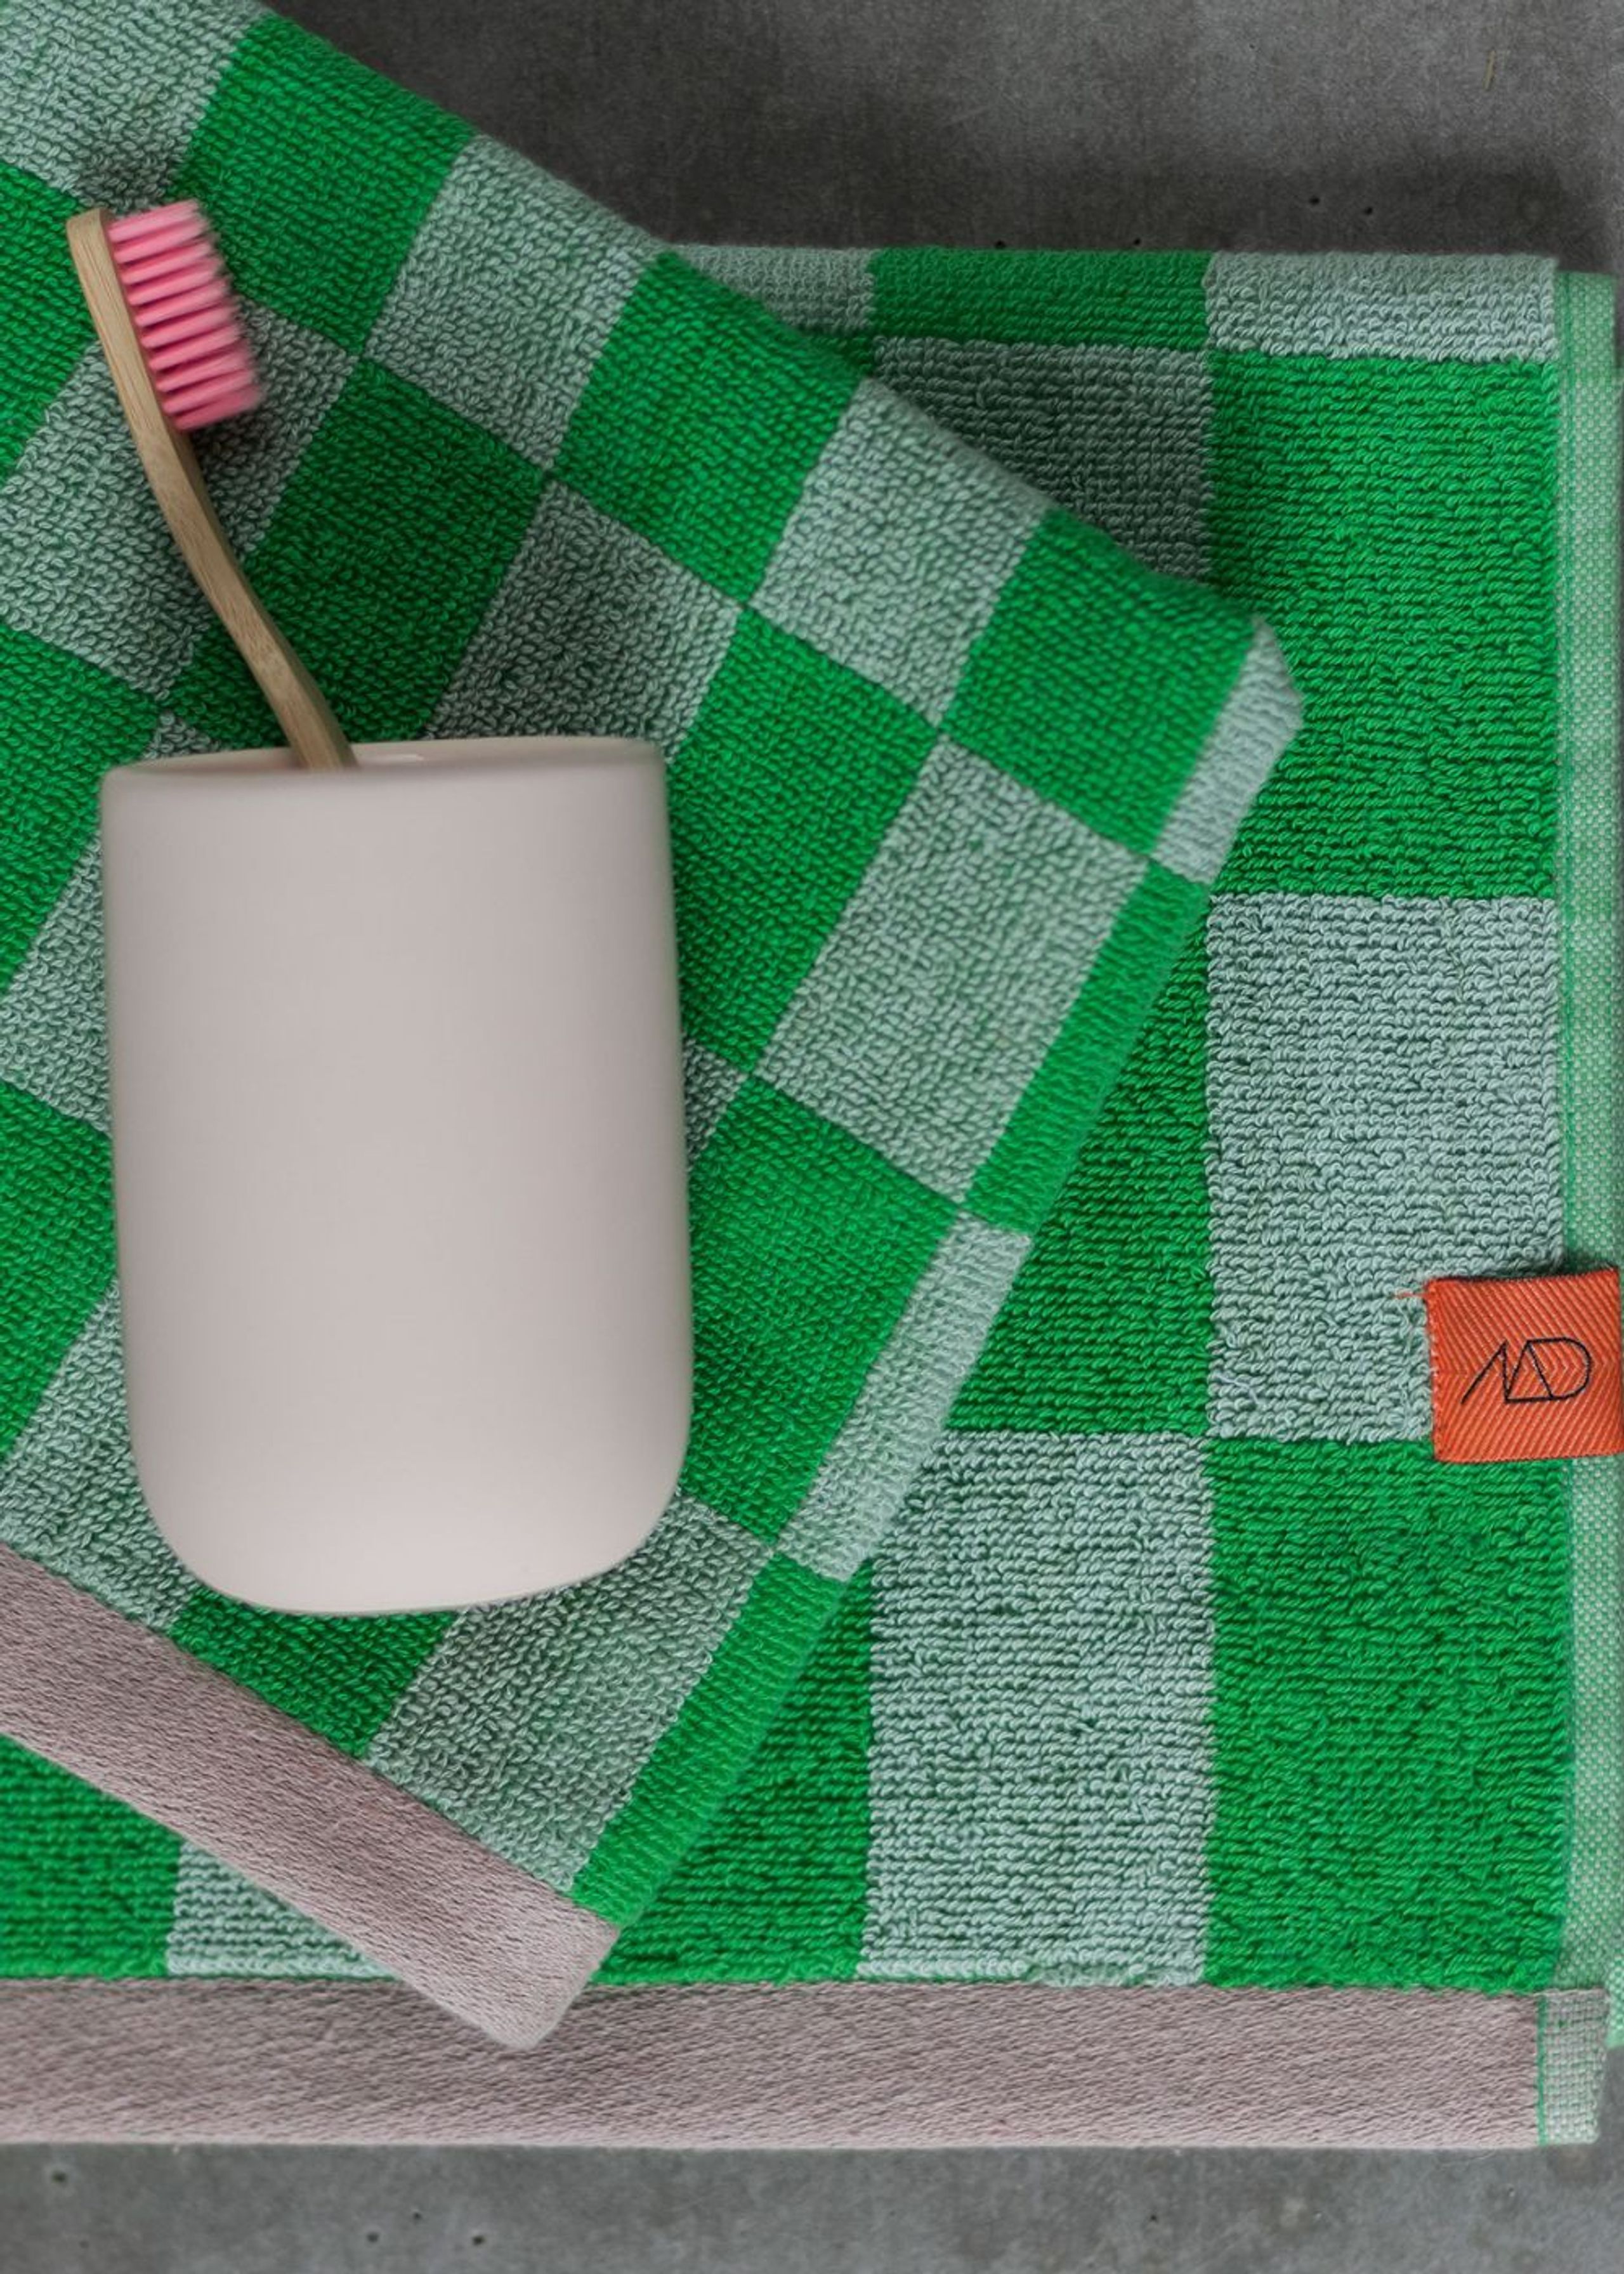 Mette Ditmer - Handtuch - RETRO Bath Towel  - Classic green